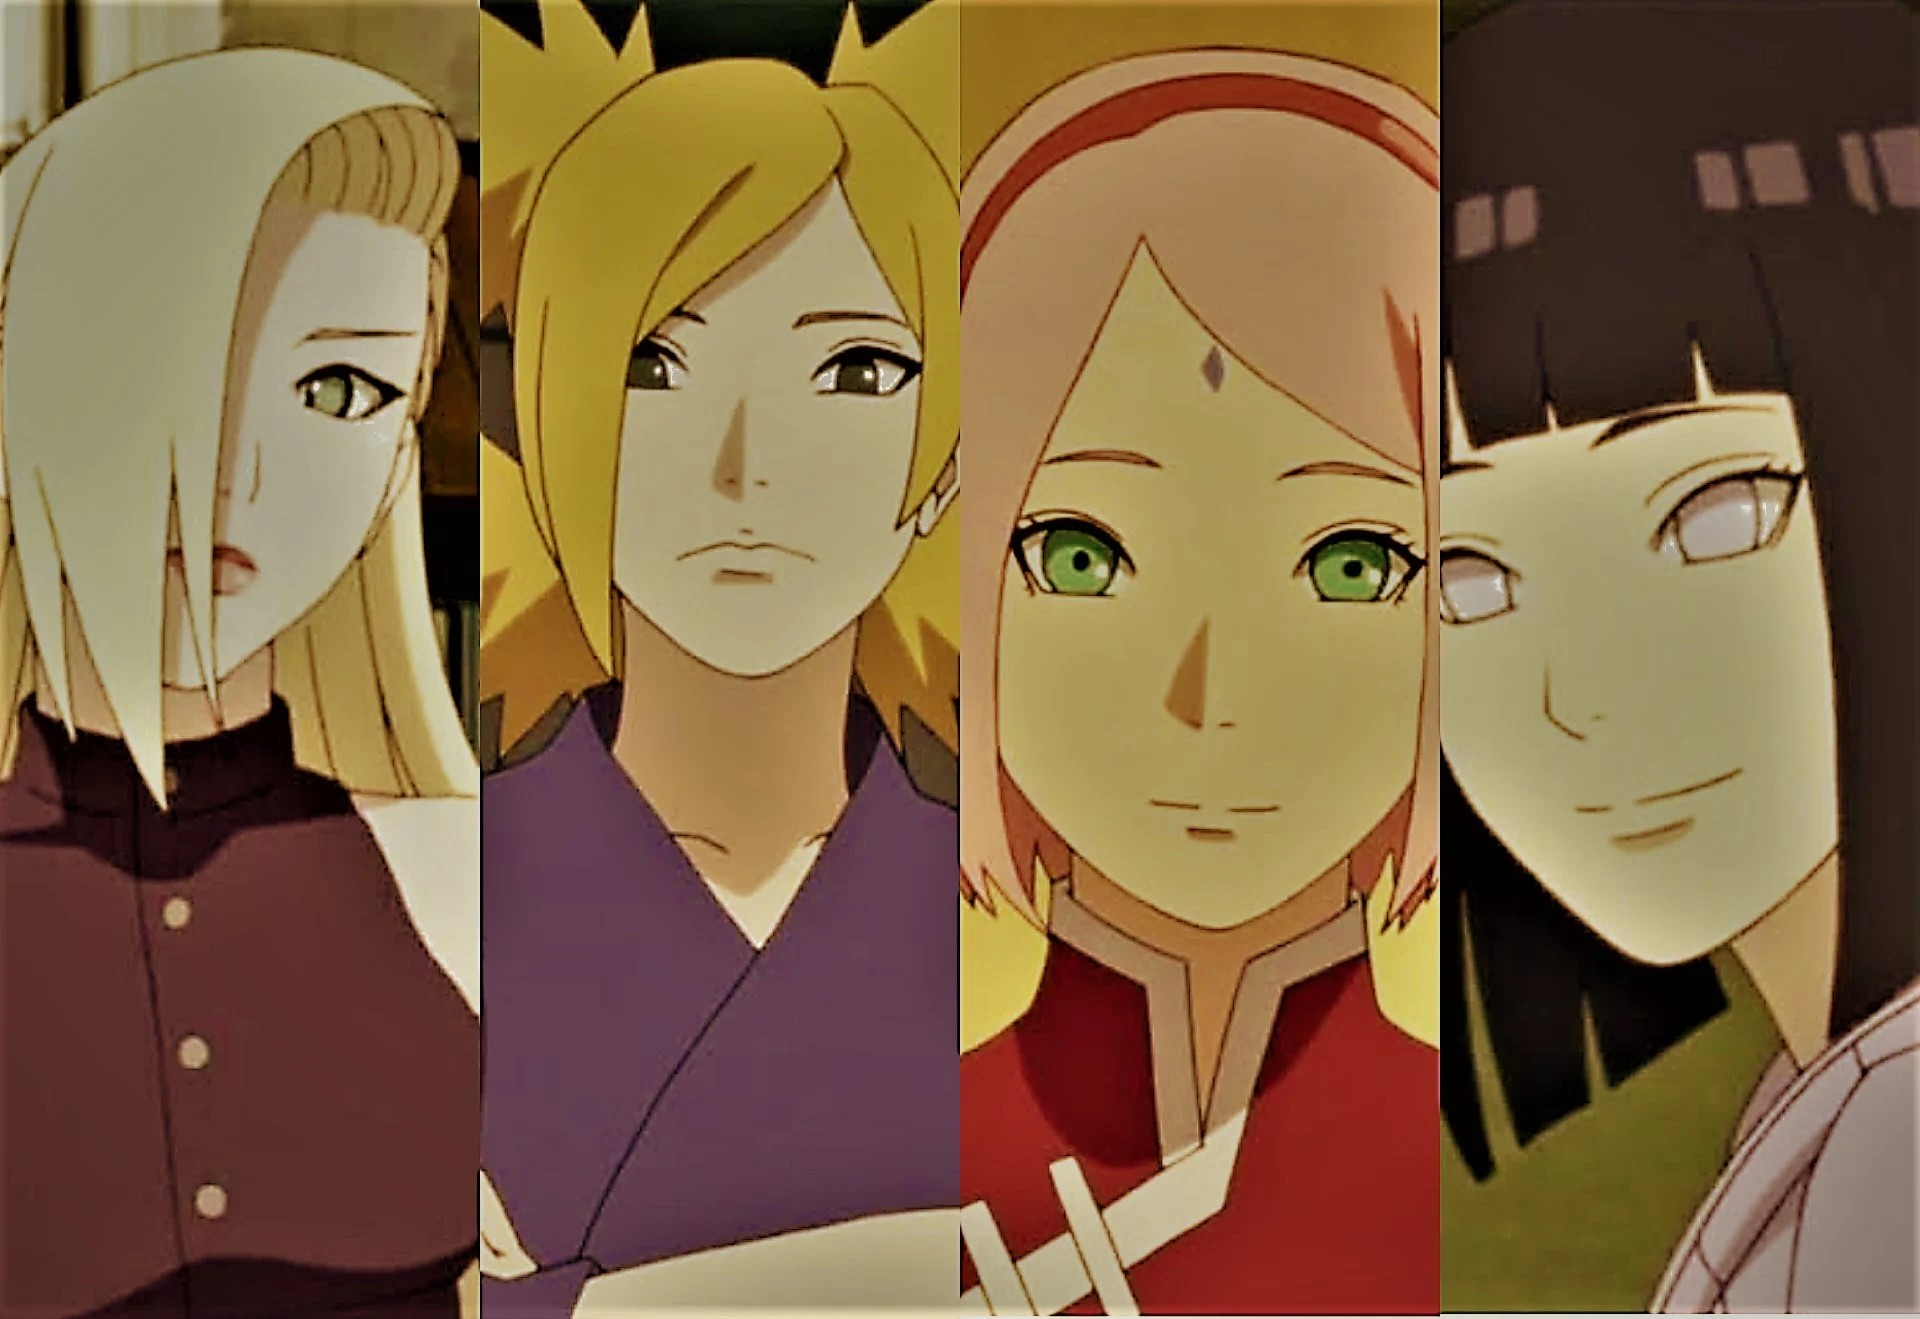 60 Most Popular Female Naruto Characters Ranked - Fantasy Topics